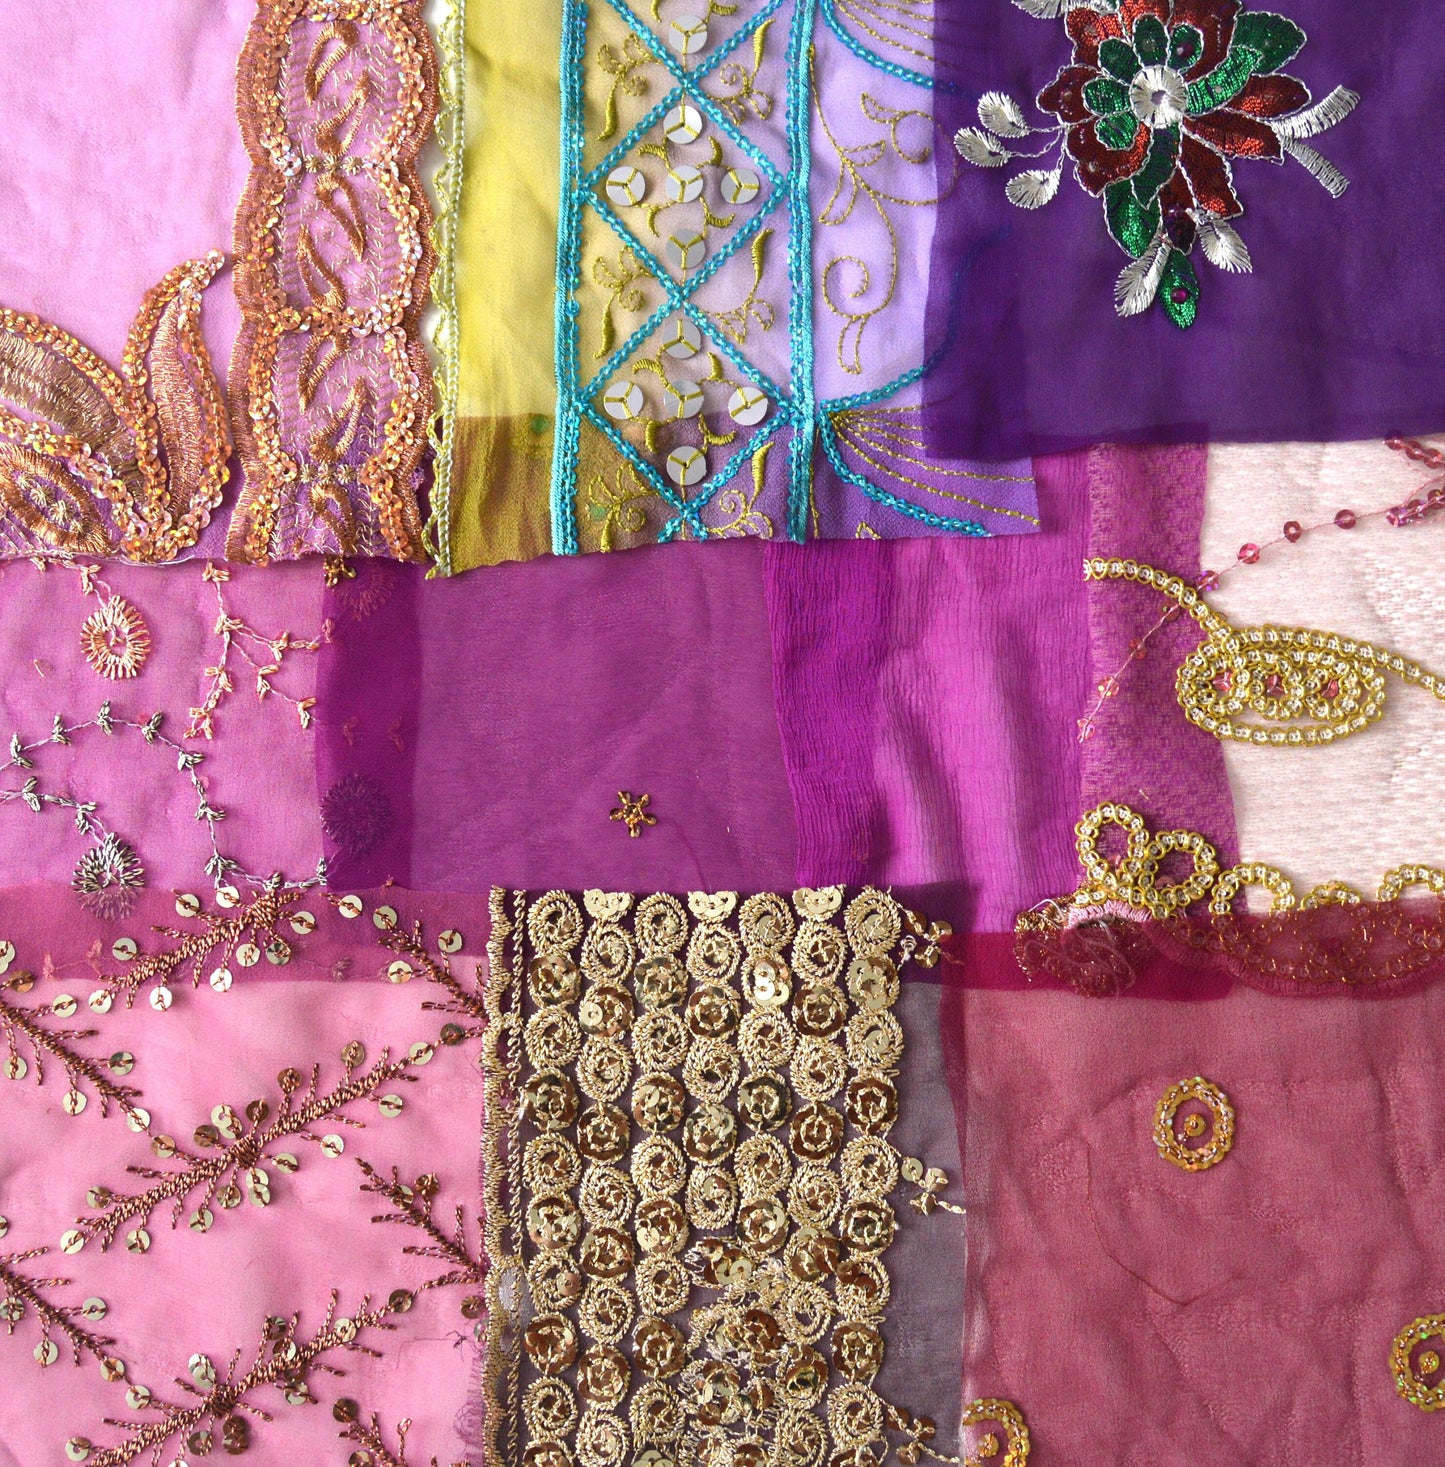 Purple Assorted Embellished Sari Fabric Remnants Scraps - 10 Pieces